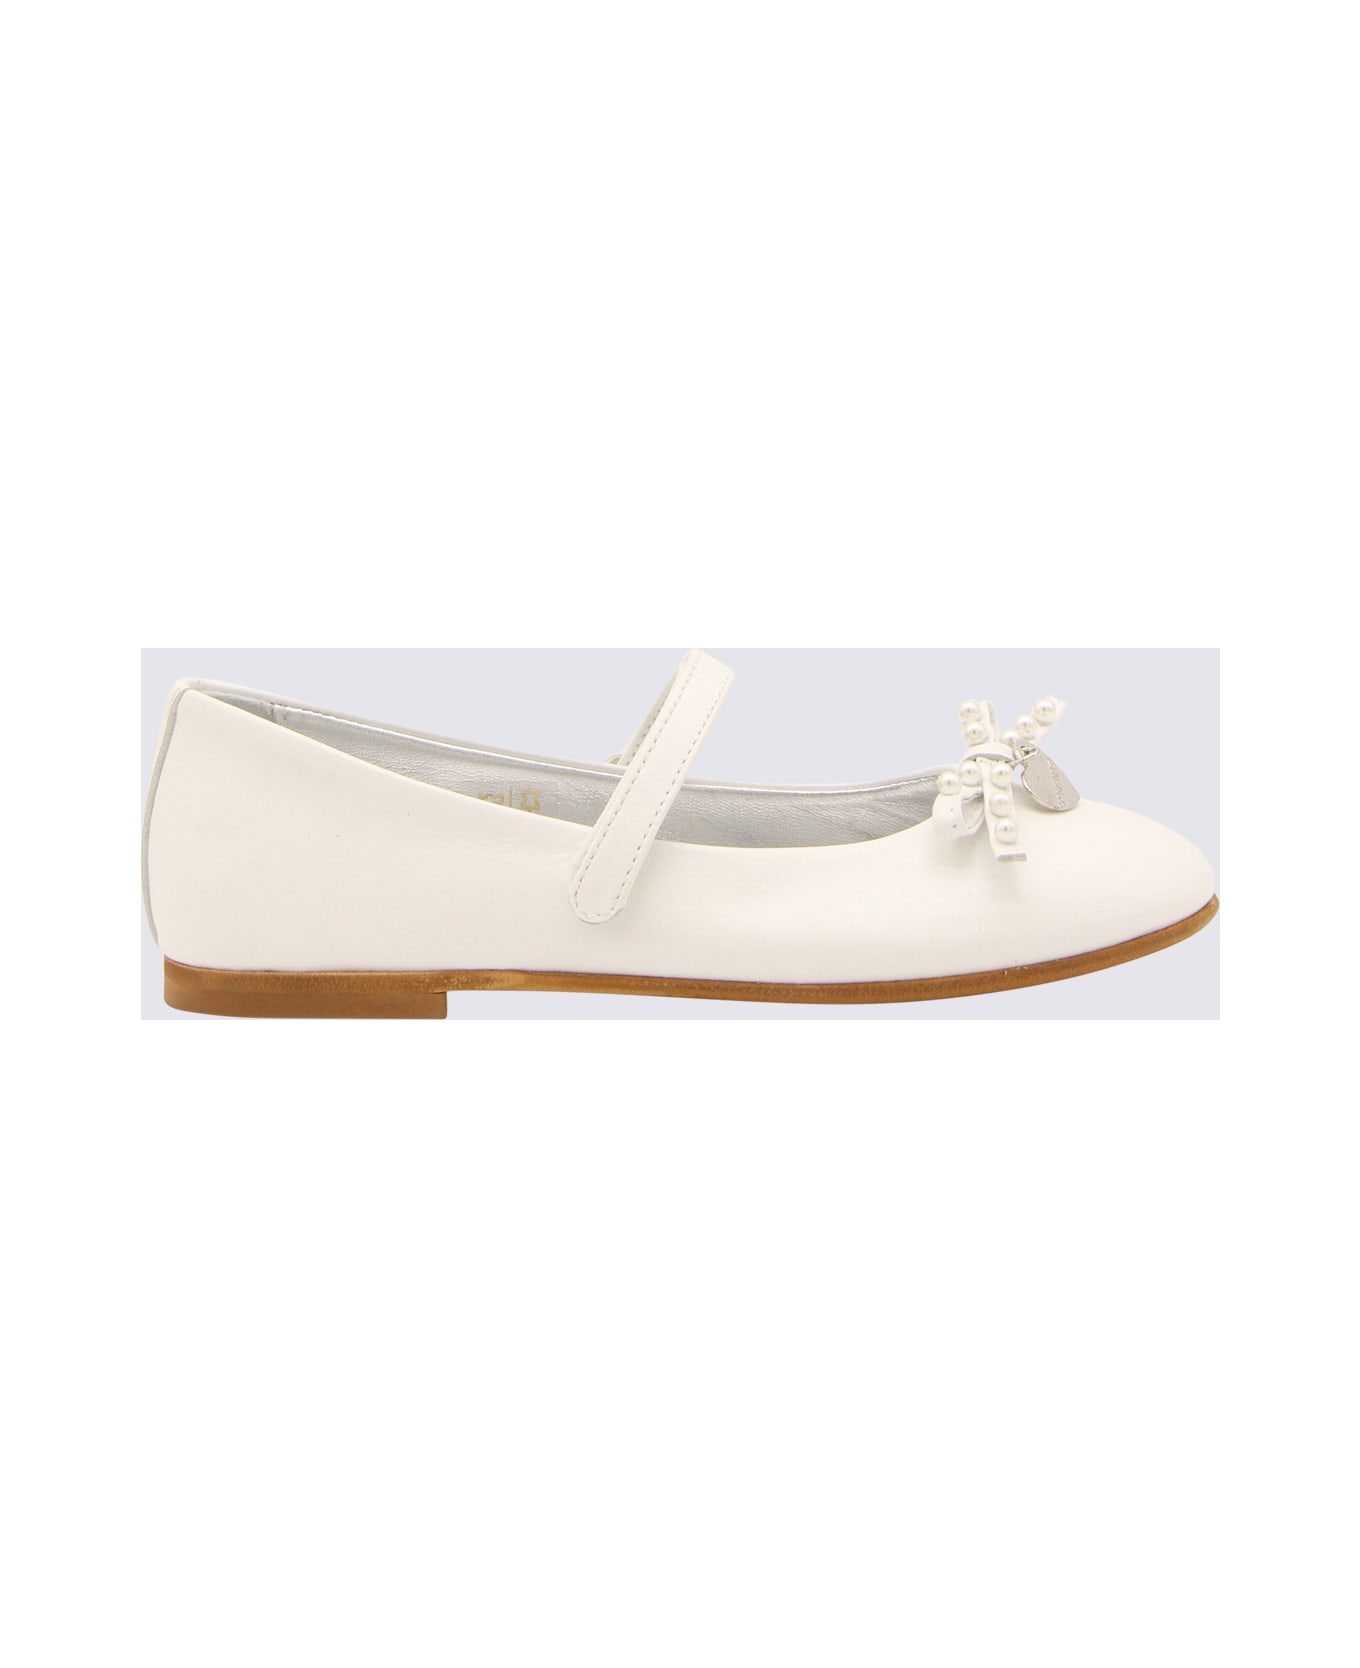 Monnalisa White Leather Flats - Cream